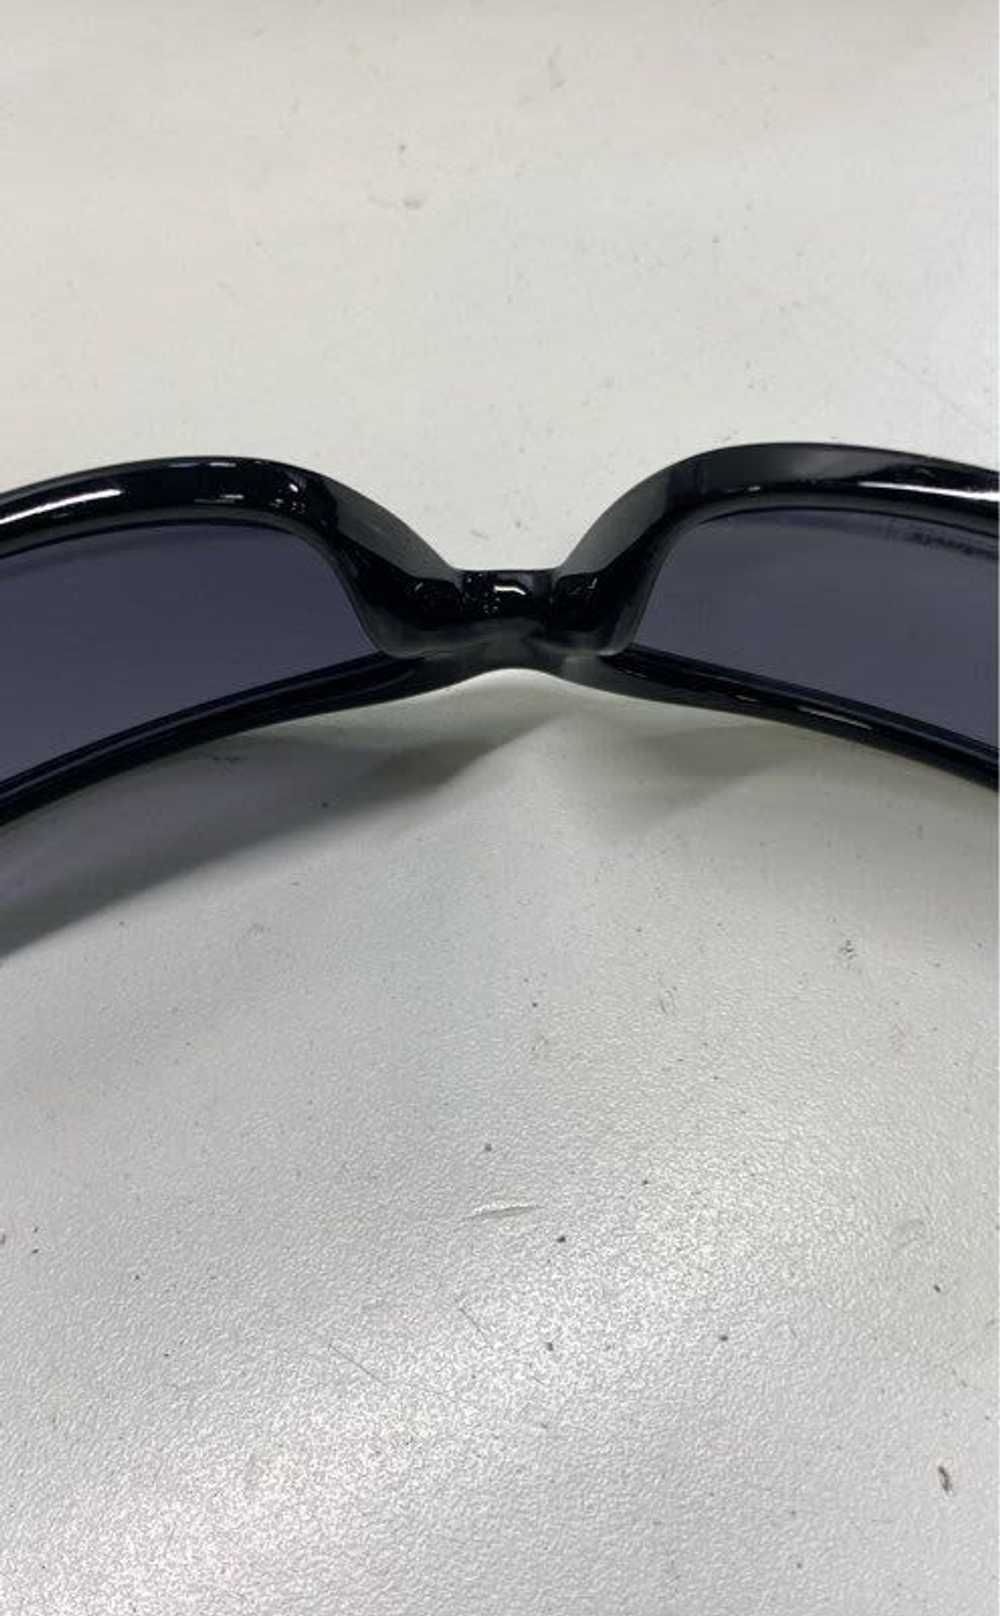 Timberland Black Sunglasses - Size One Size - image 9